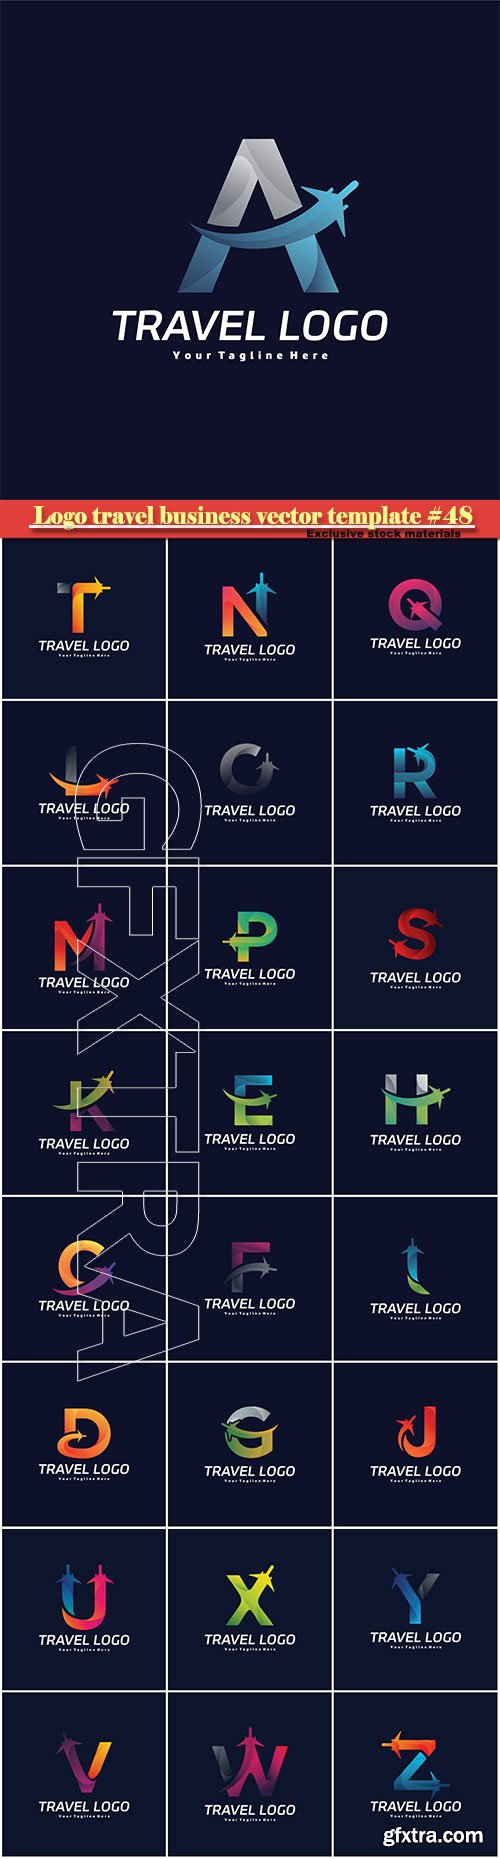 Logo travel business vector illustration template #48